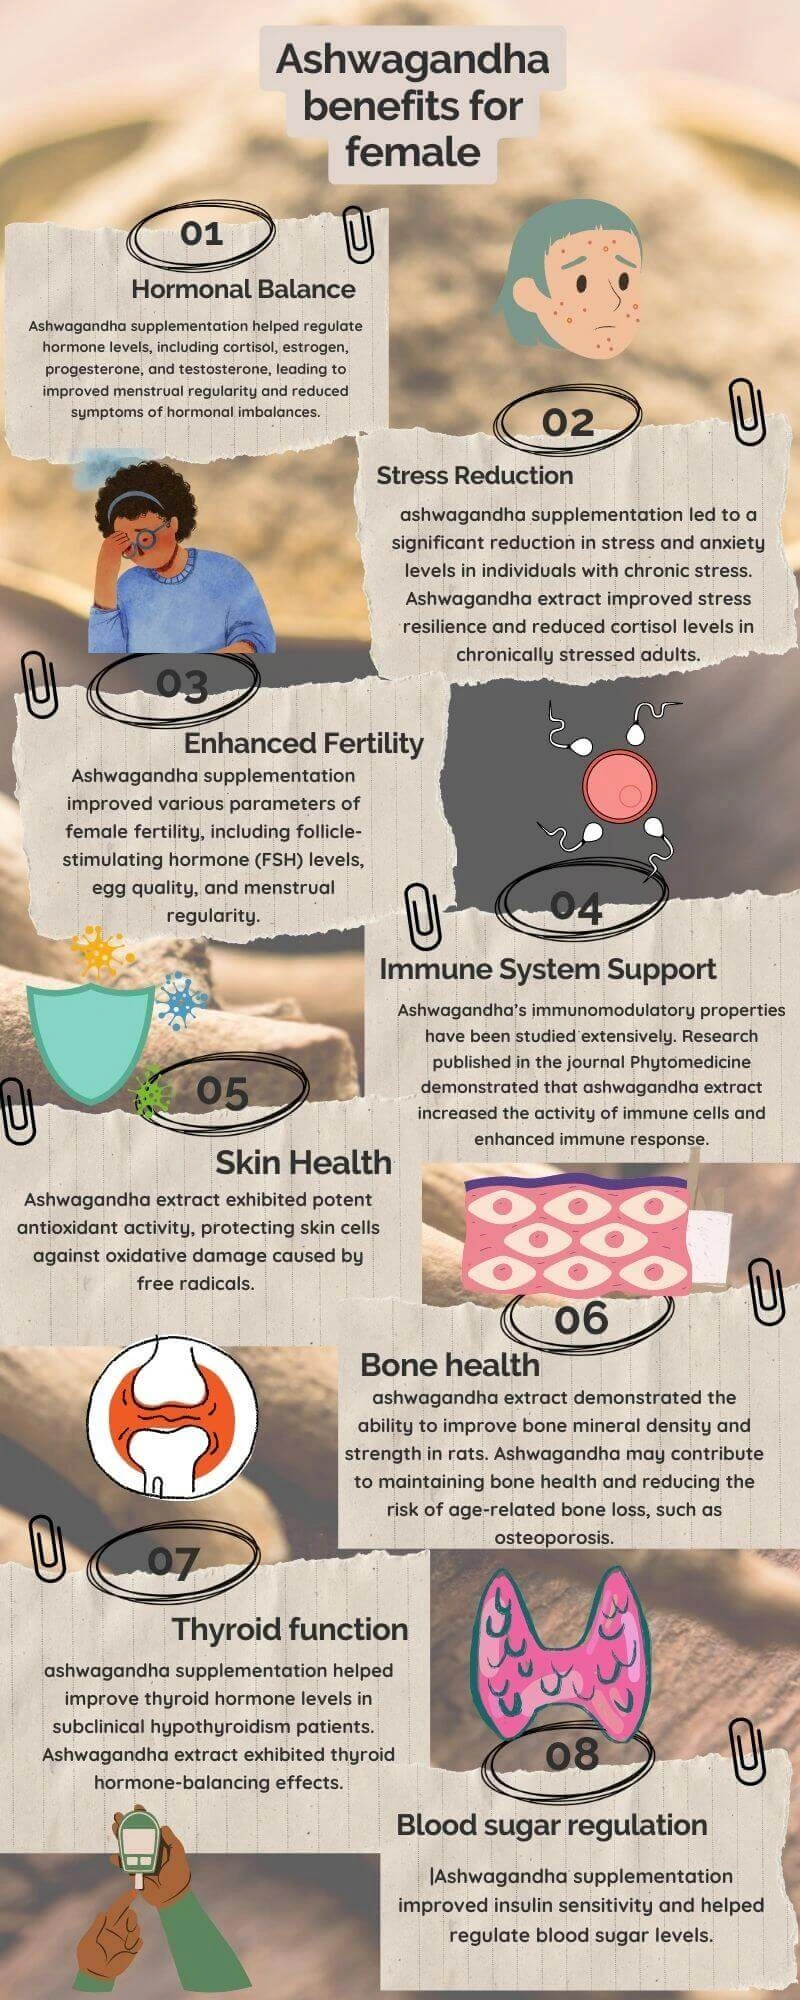 infographic on ashwagandha benefits for females